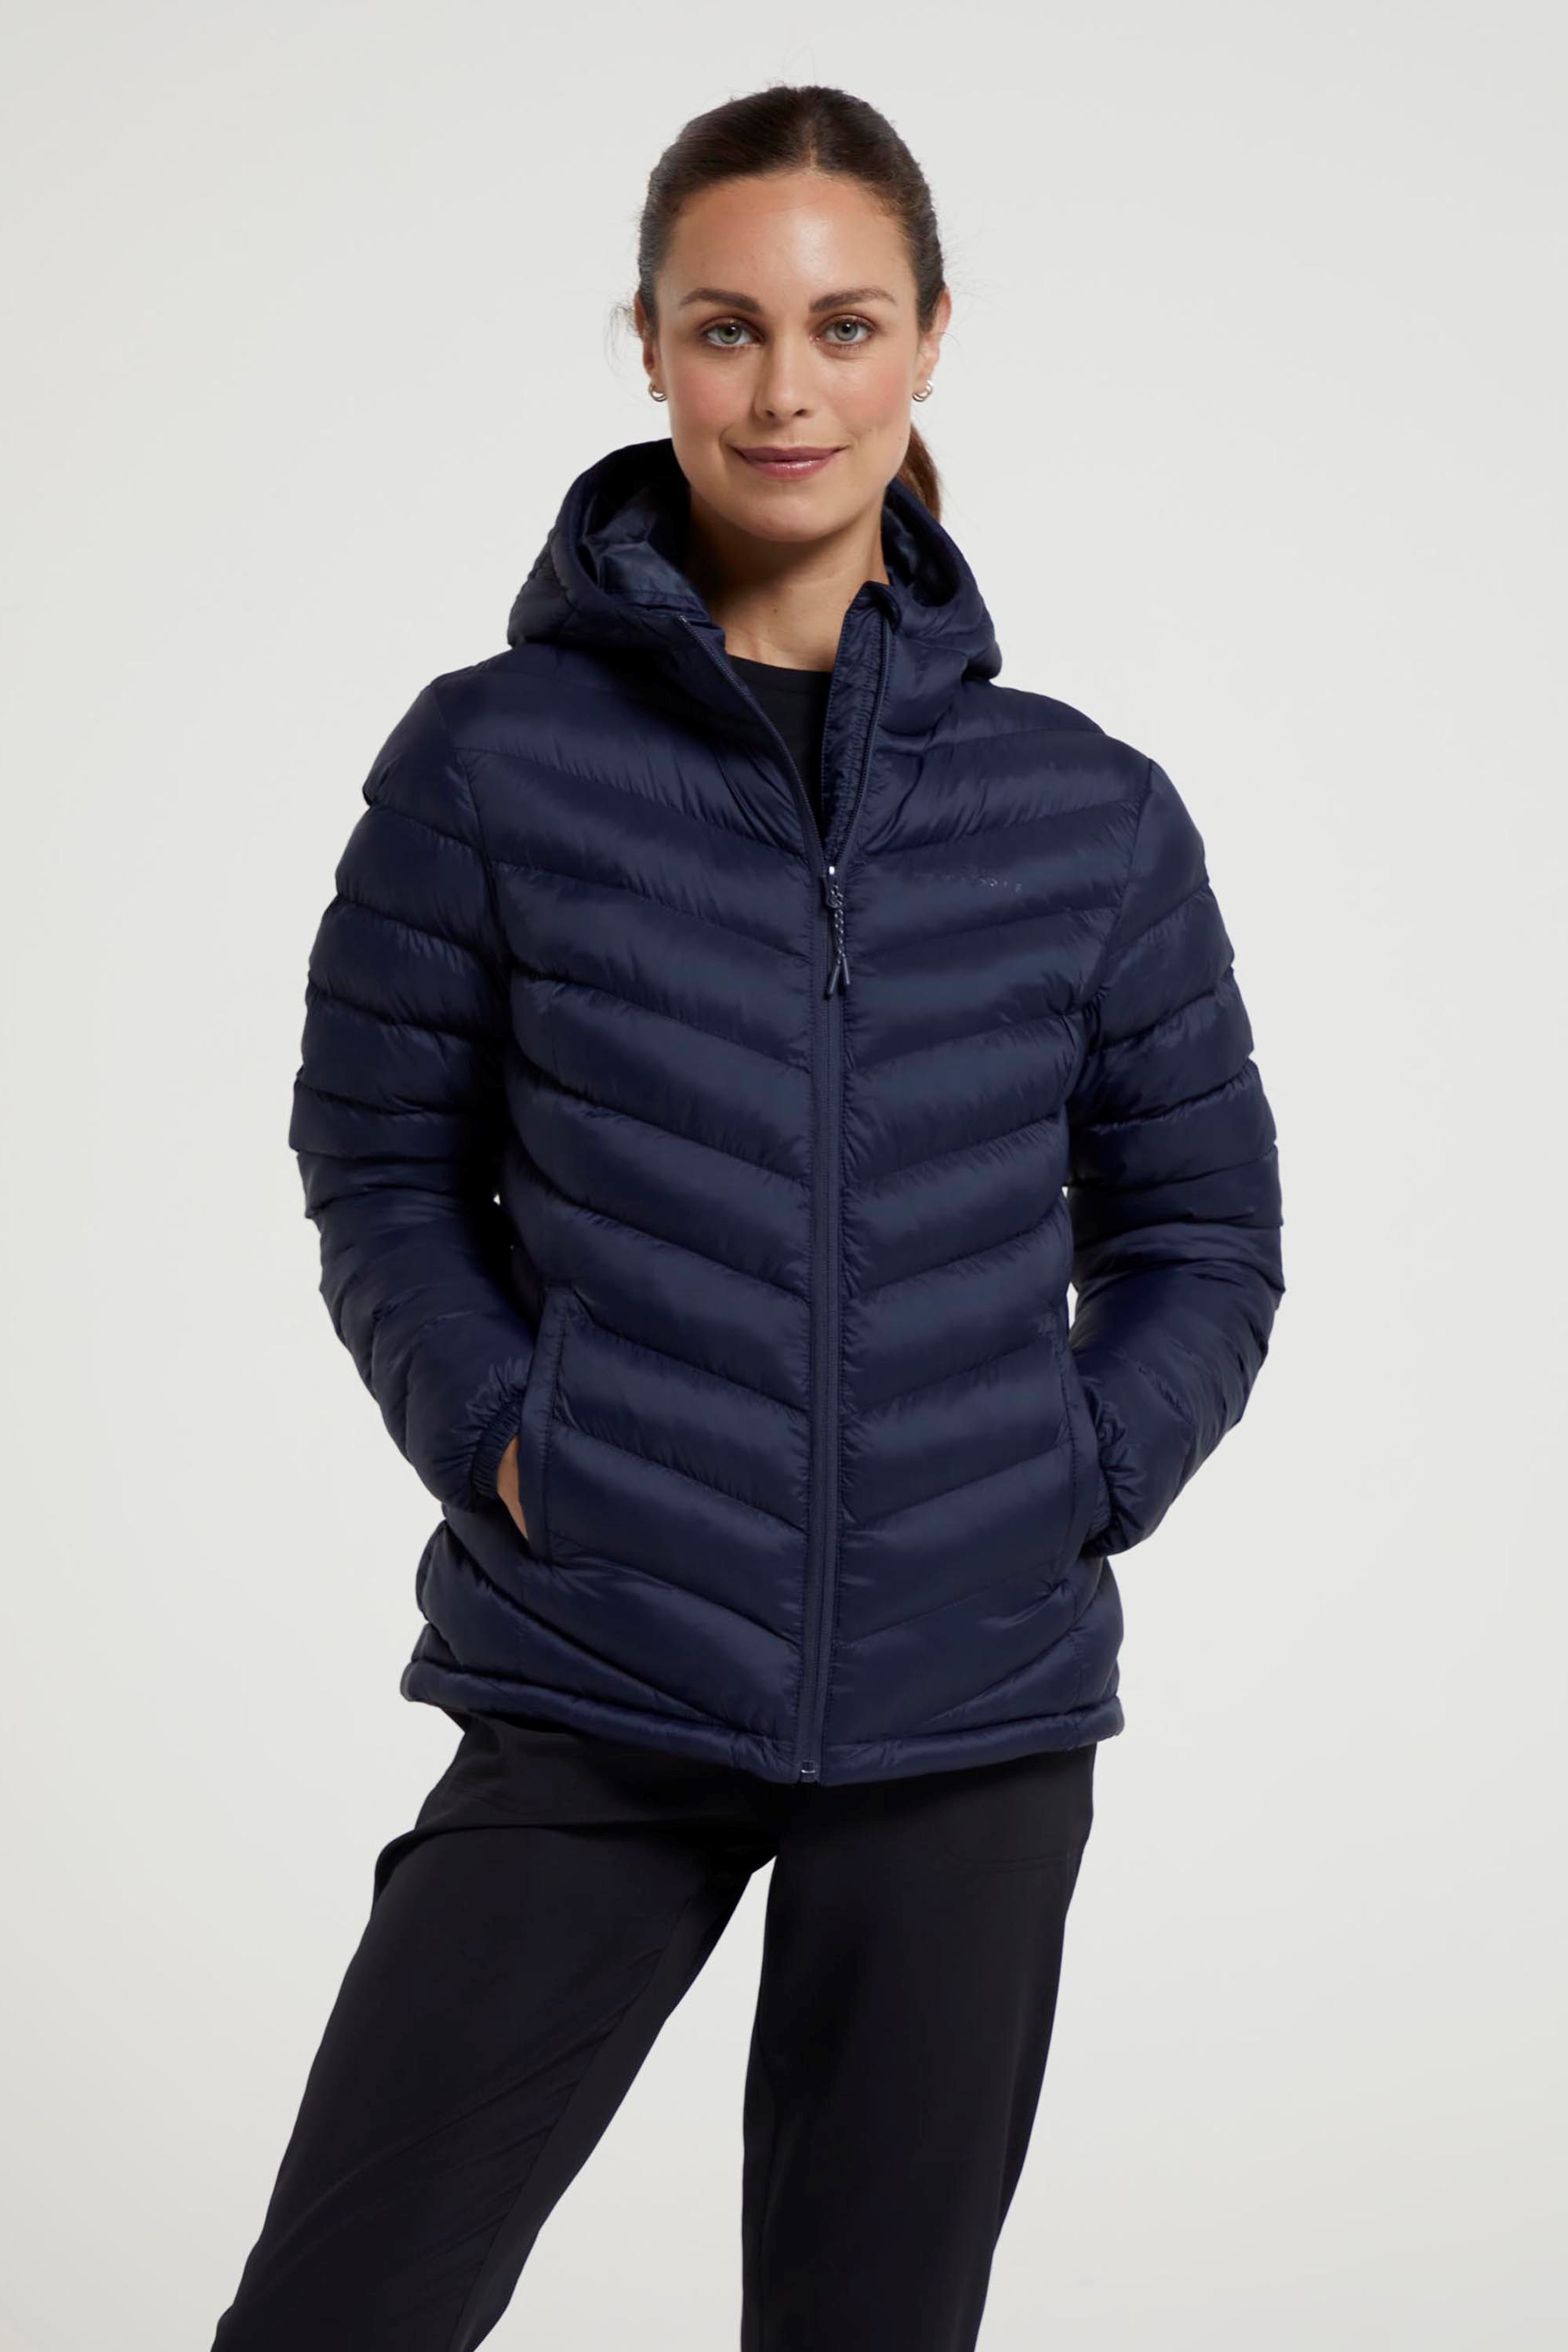 Jackets | Buy Women's Coats & Jackets Online Australia - THE ICONIC